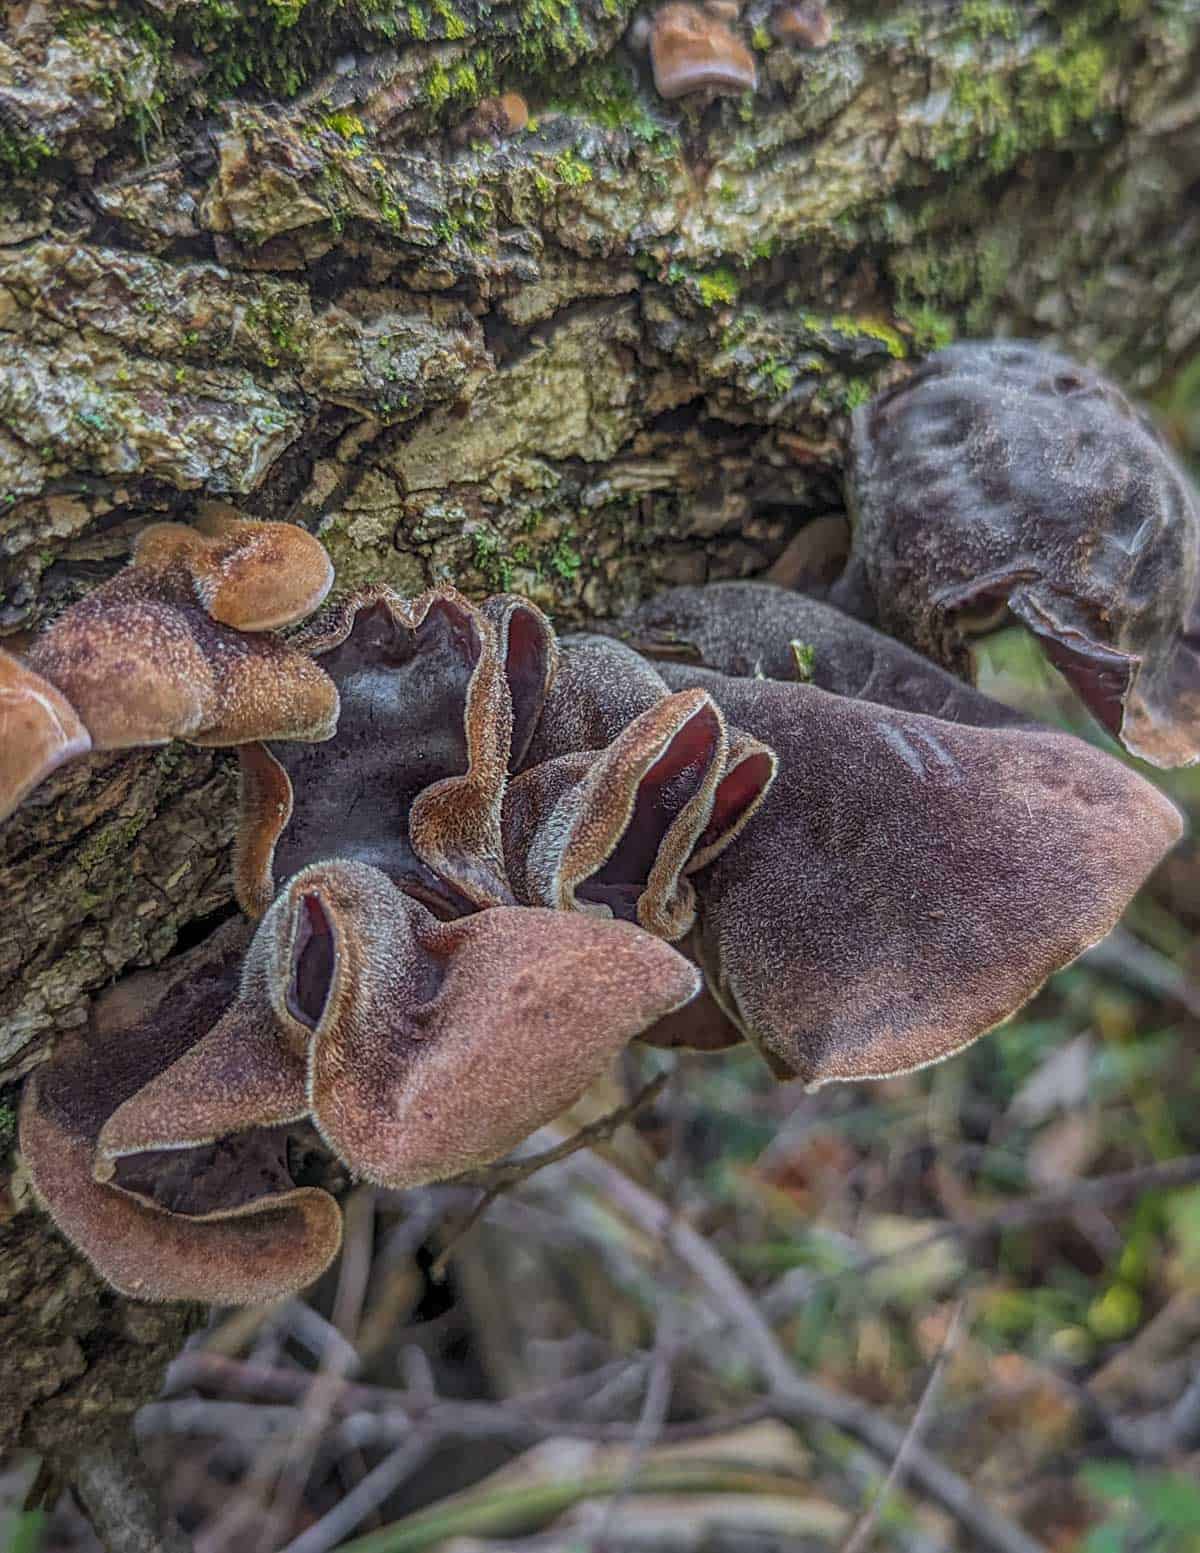 A. angiospermarum wood ear mushroom growing on a dead hardwood log like an oak. 